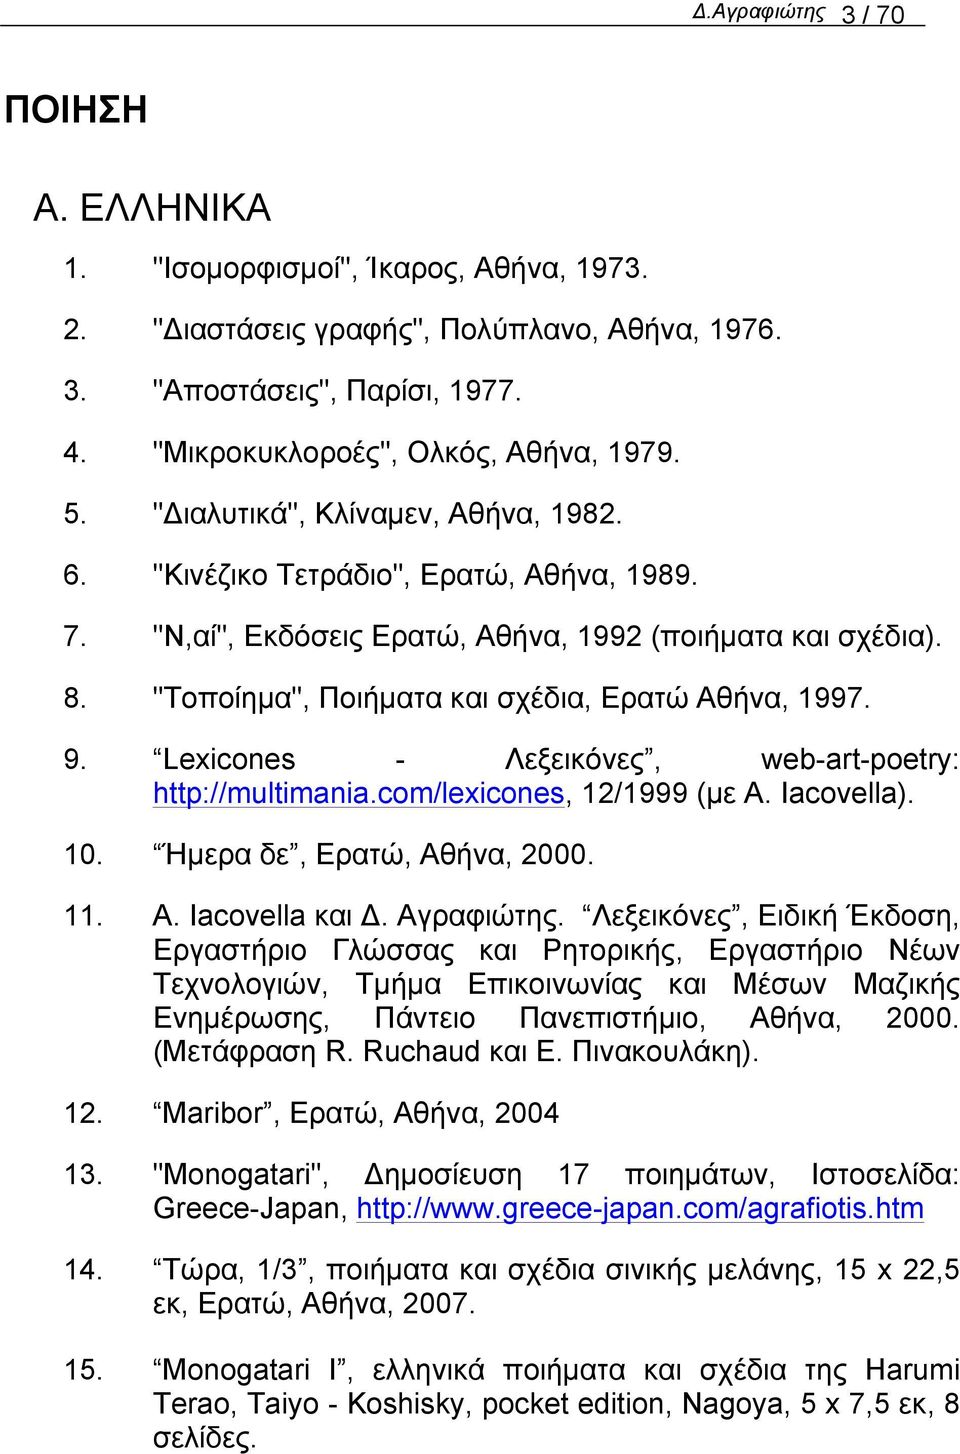 9. Lexicones - Λεξεικόνες, web-art-poetry: http://multimania.com/lexicones, 12/1999 (µε A. Iacovella). 10. Ήµερα δε, Ερατώ, Αθήνα, 2000. 11. A. Iacovella και Δ. Αγραφιώτης.